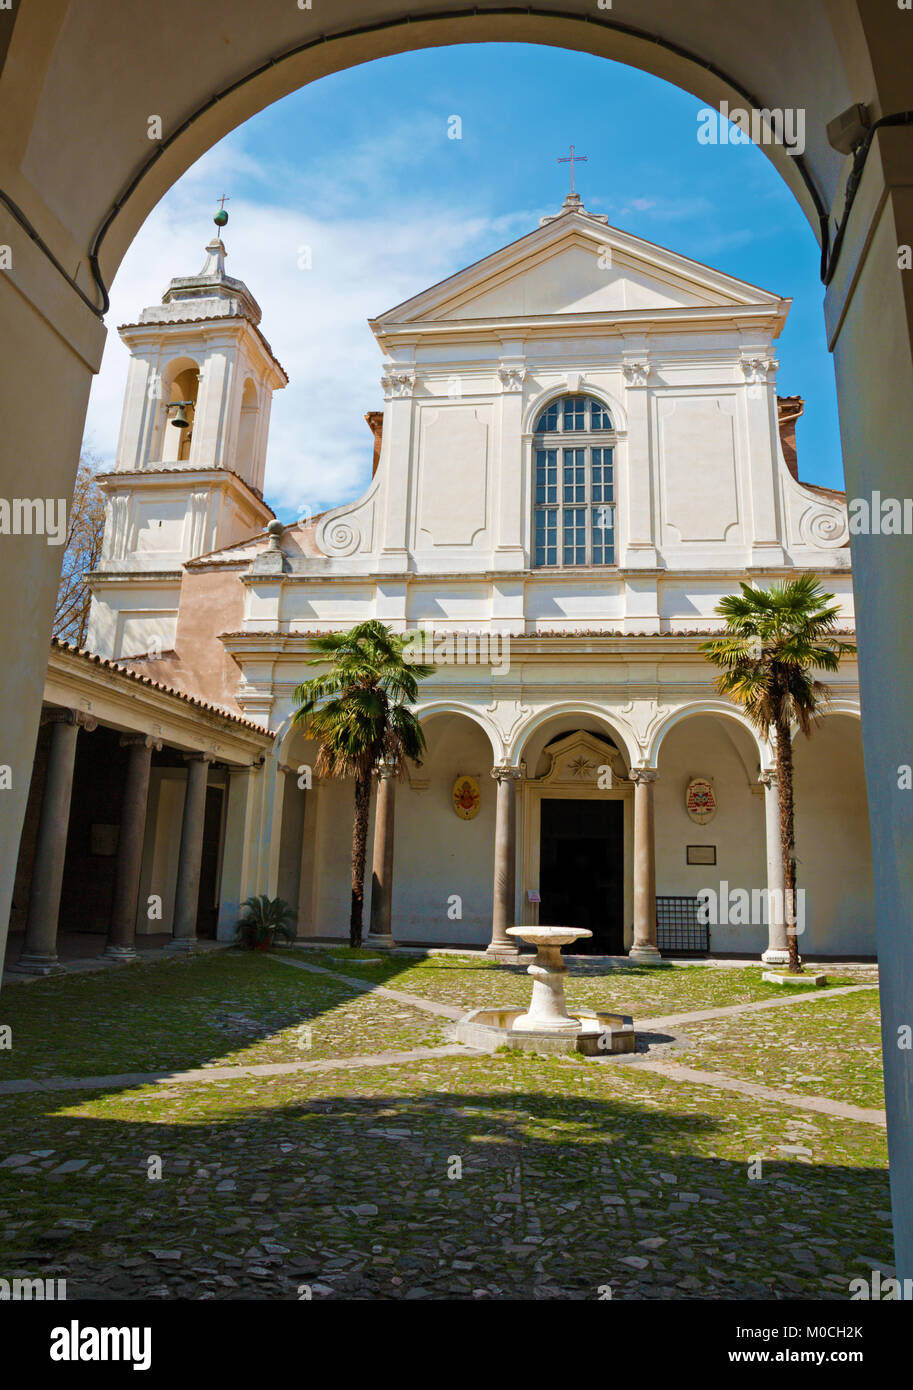 Rom, Italien, März, 2012: Die Chiesa di San Clemente mit dem Atrium. Stockfoto